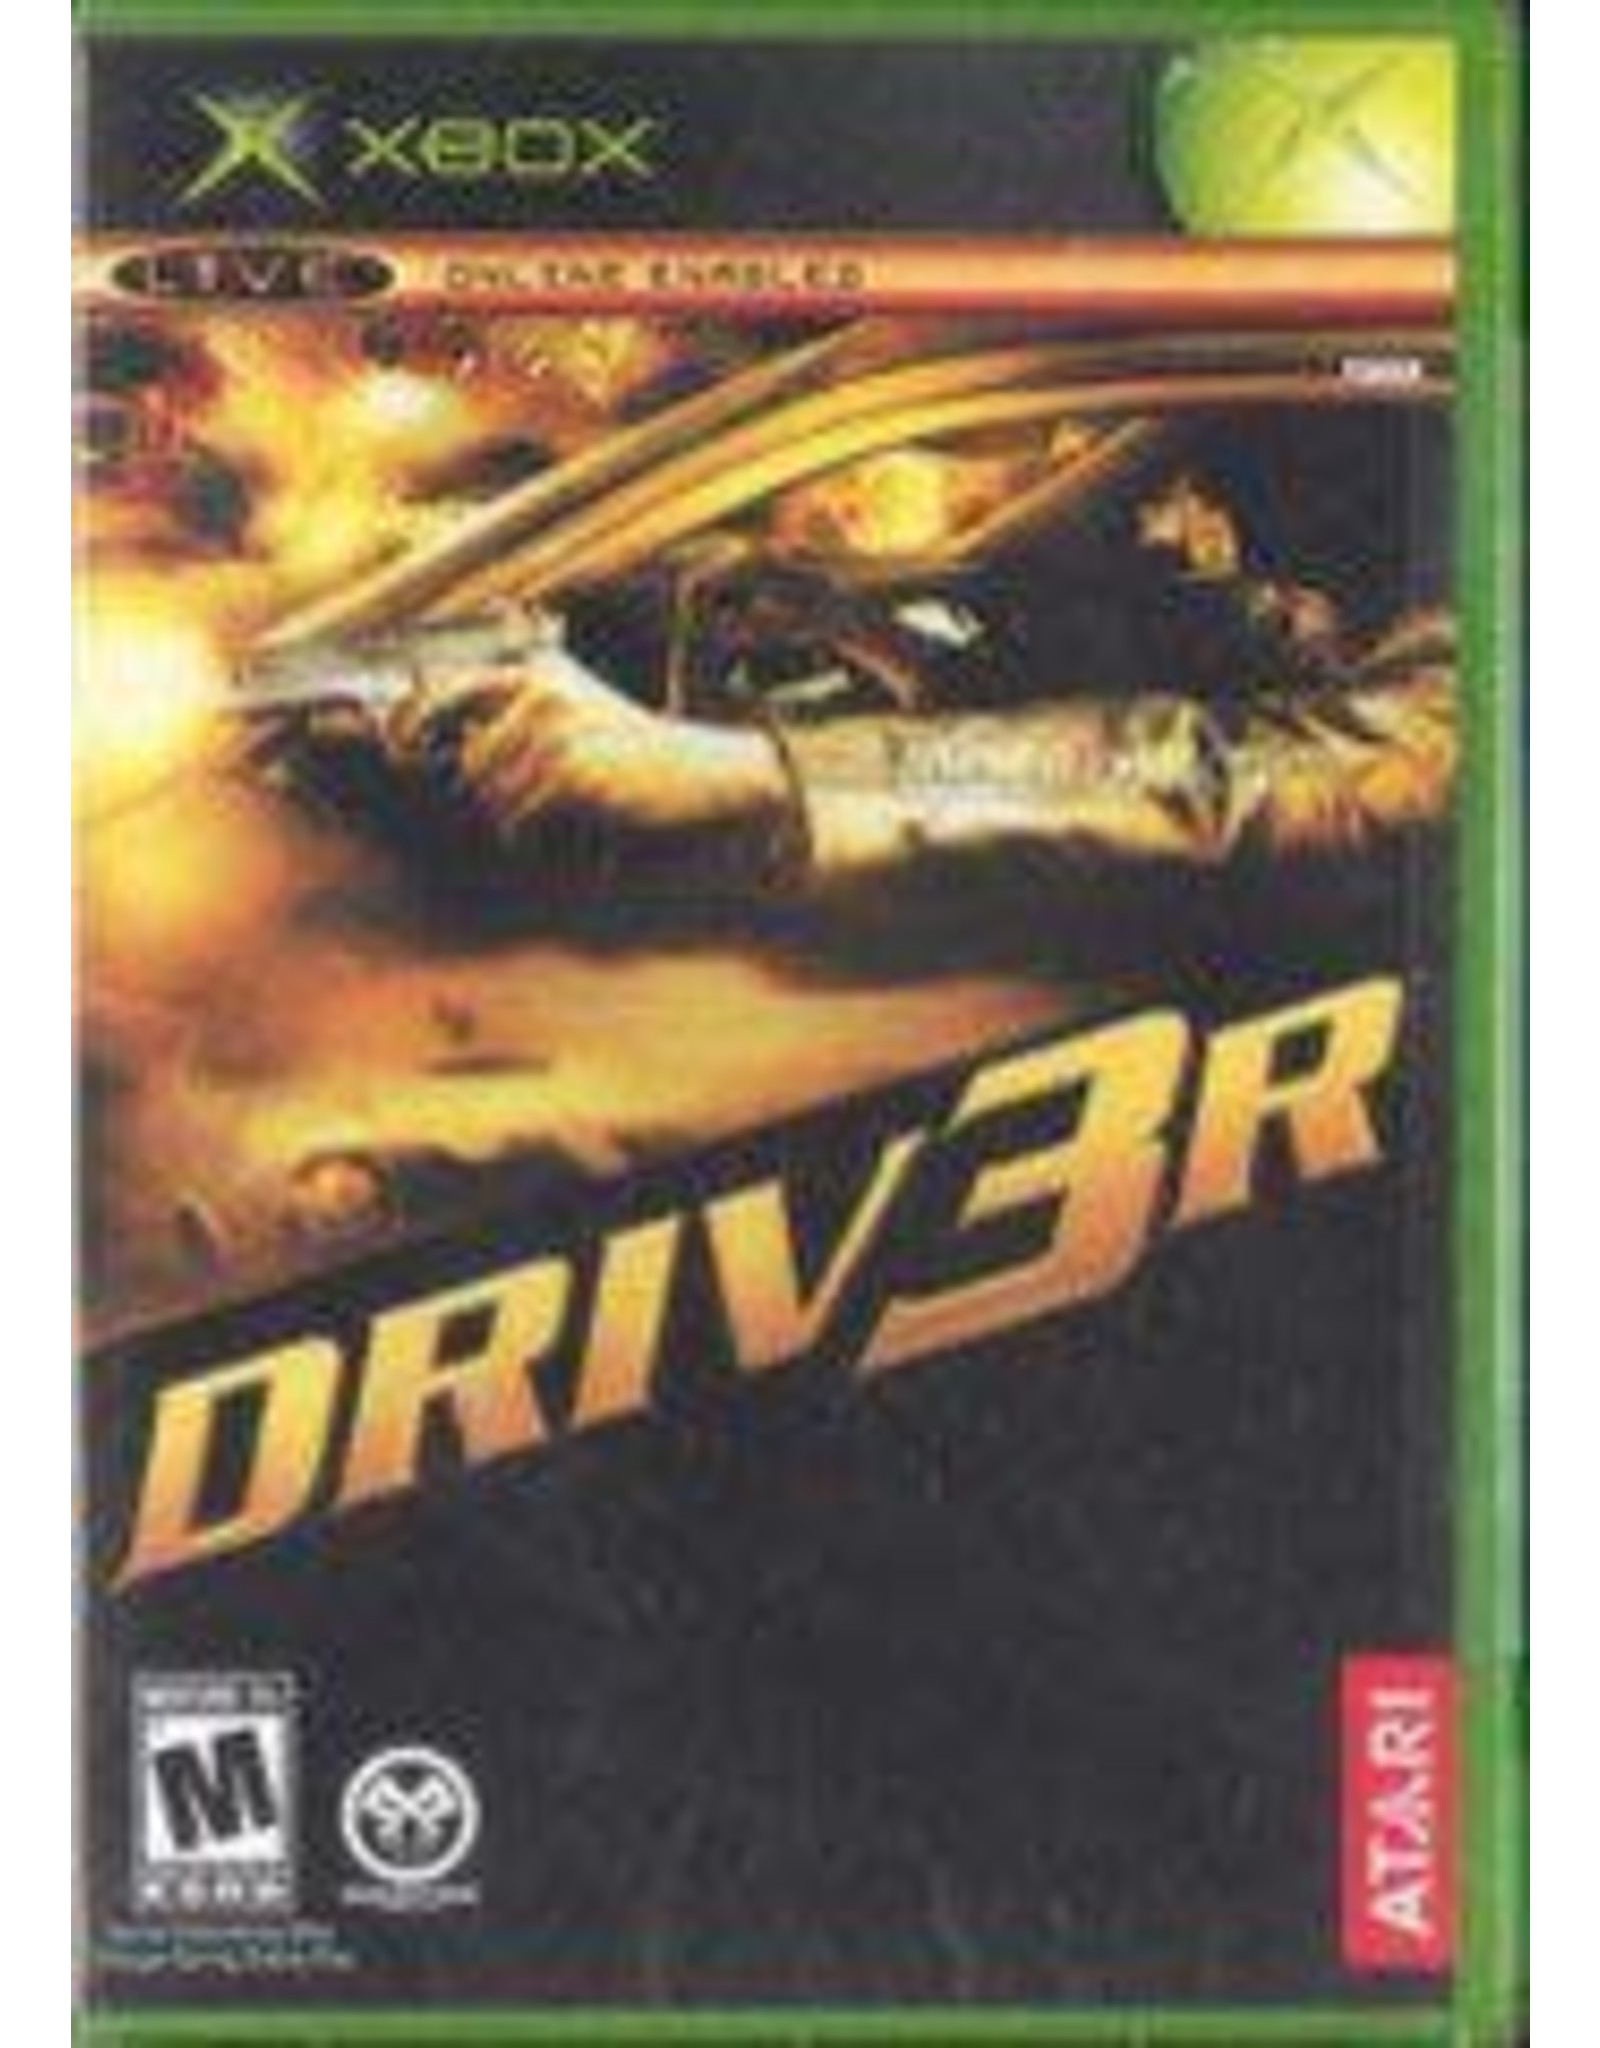 Xbox Driver 3 (No Manual)